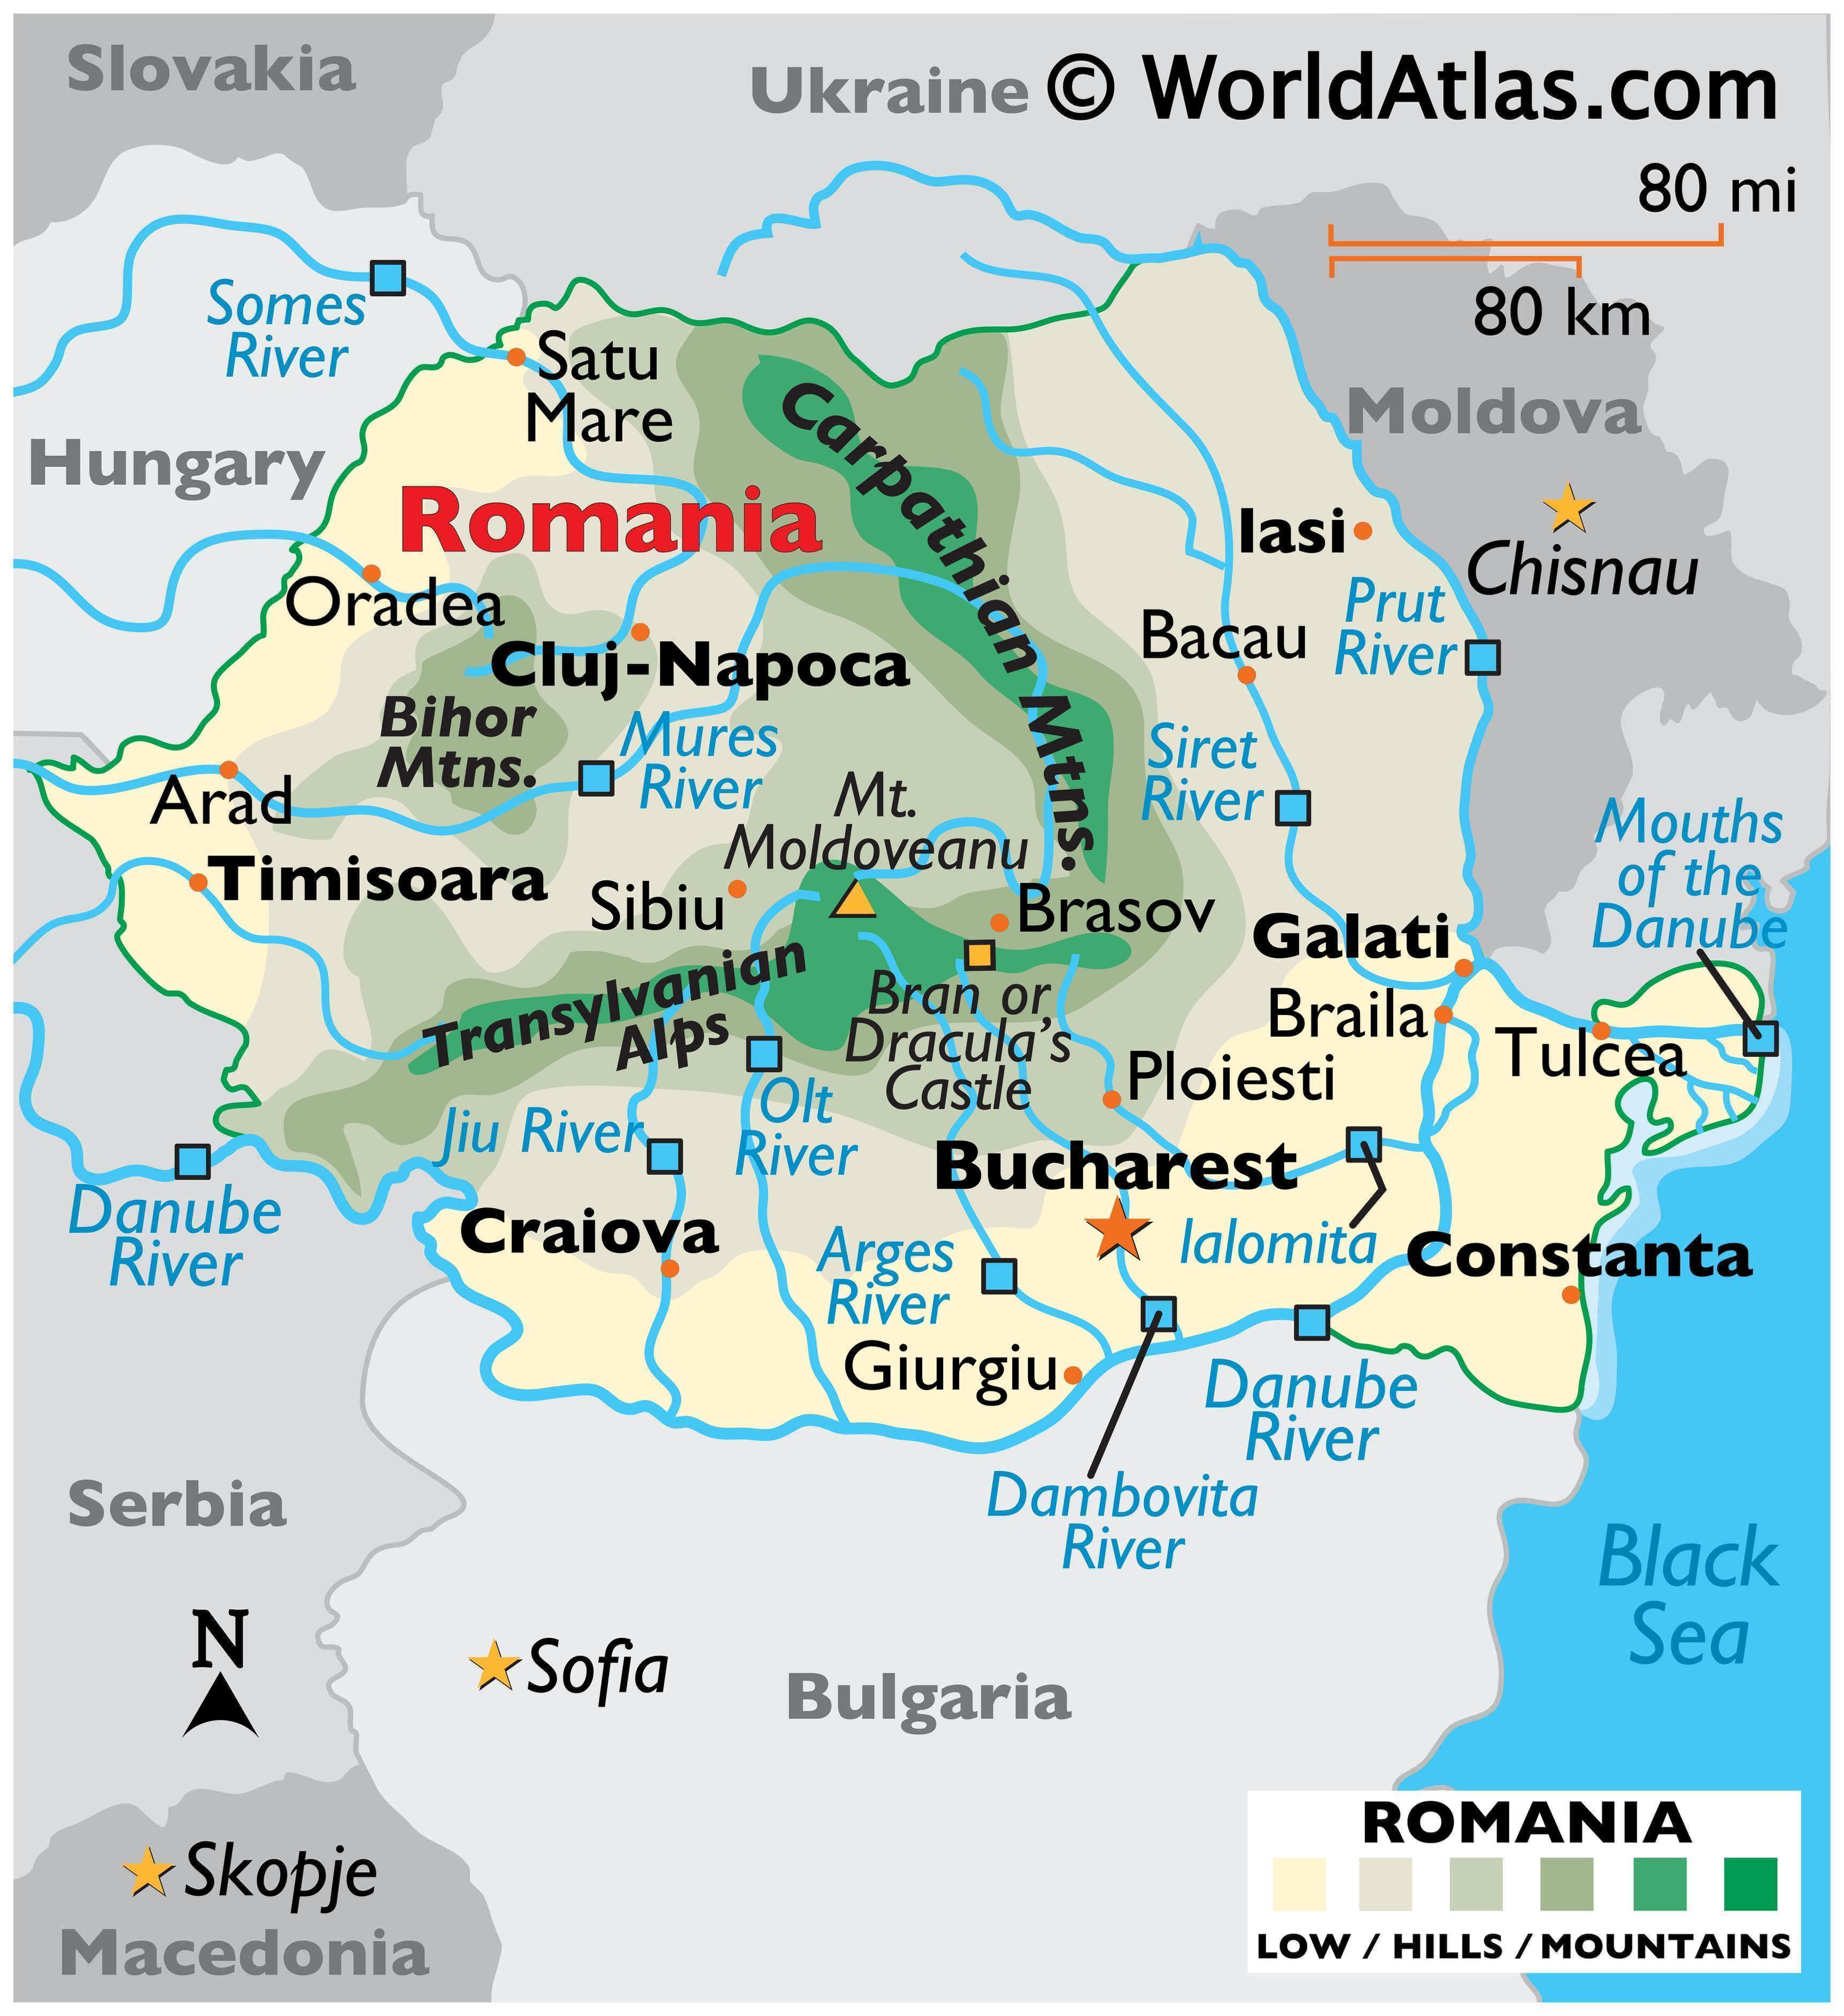 Romania - Transylvania, Carpathians, Danube